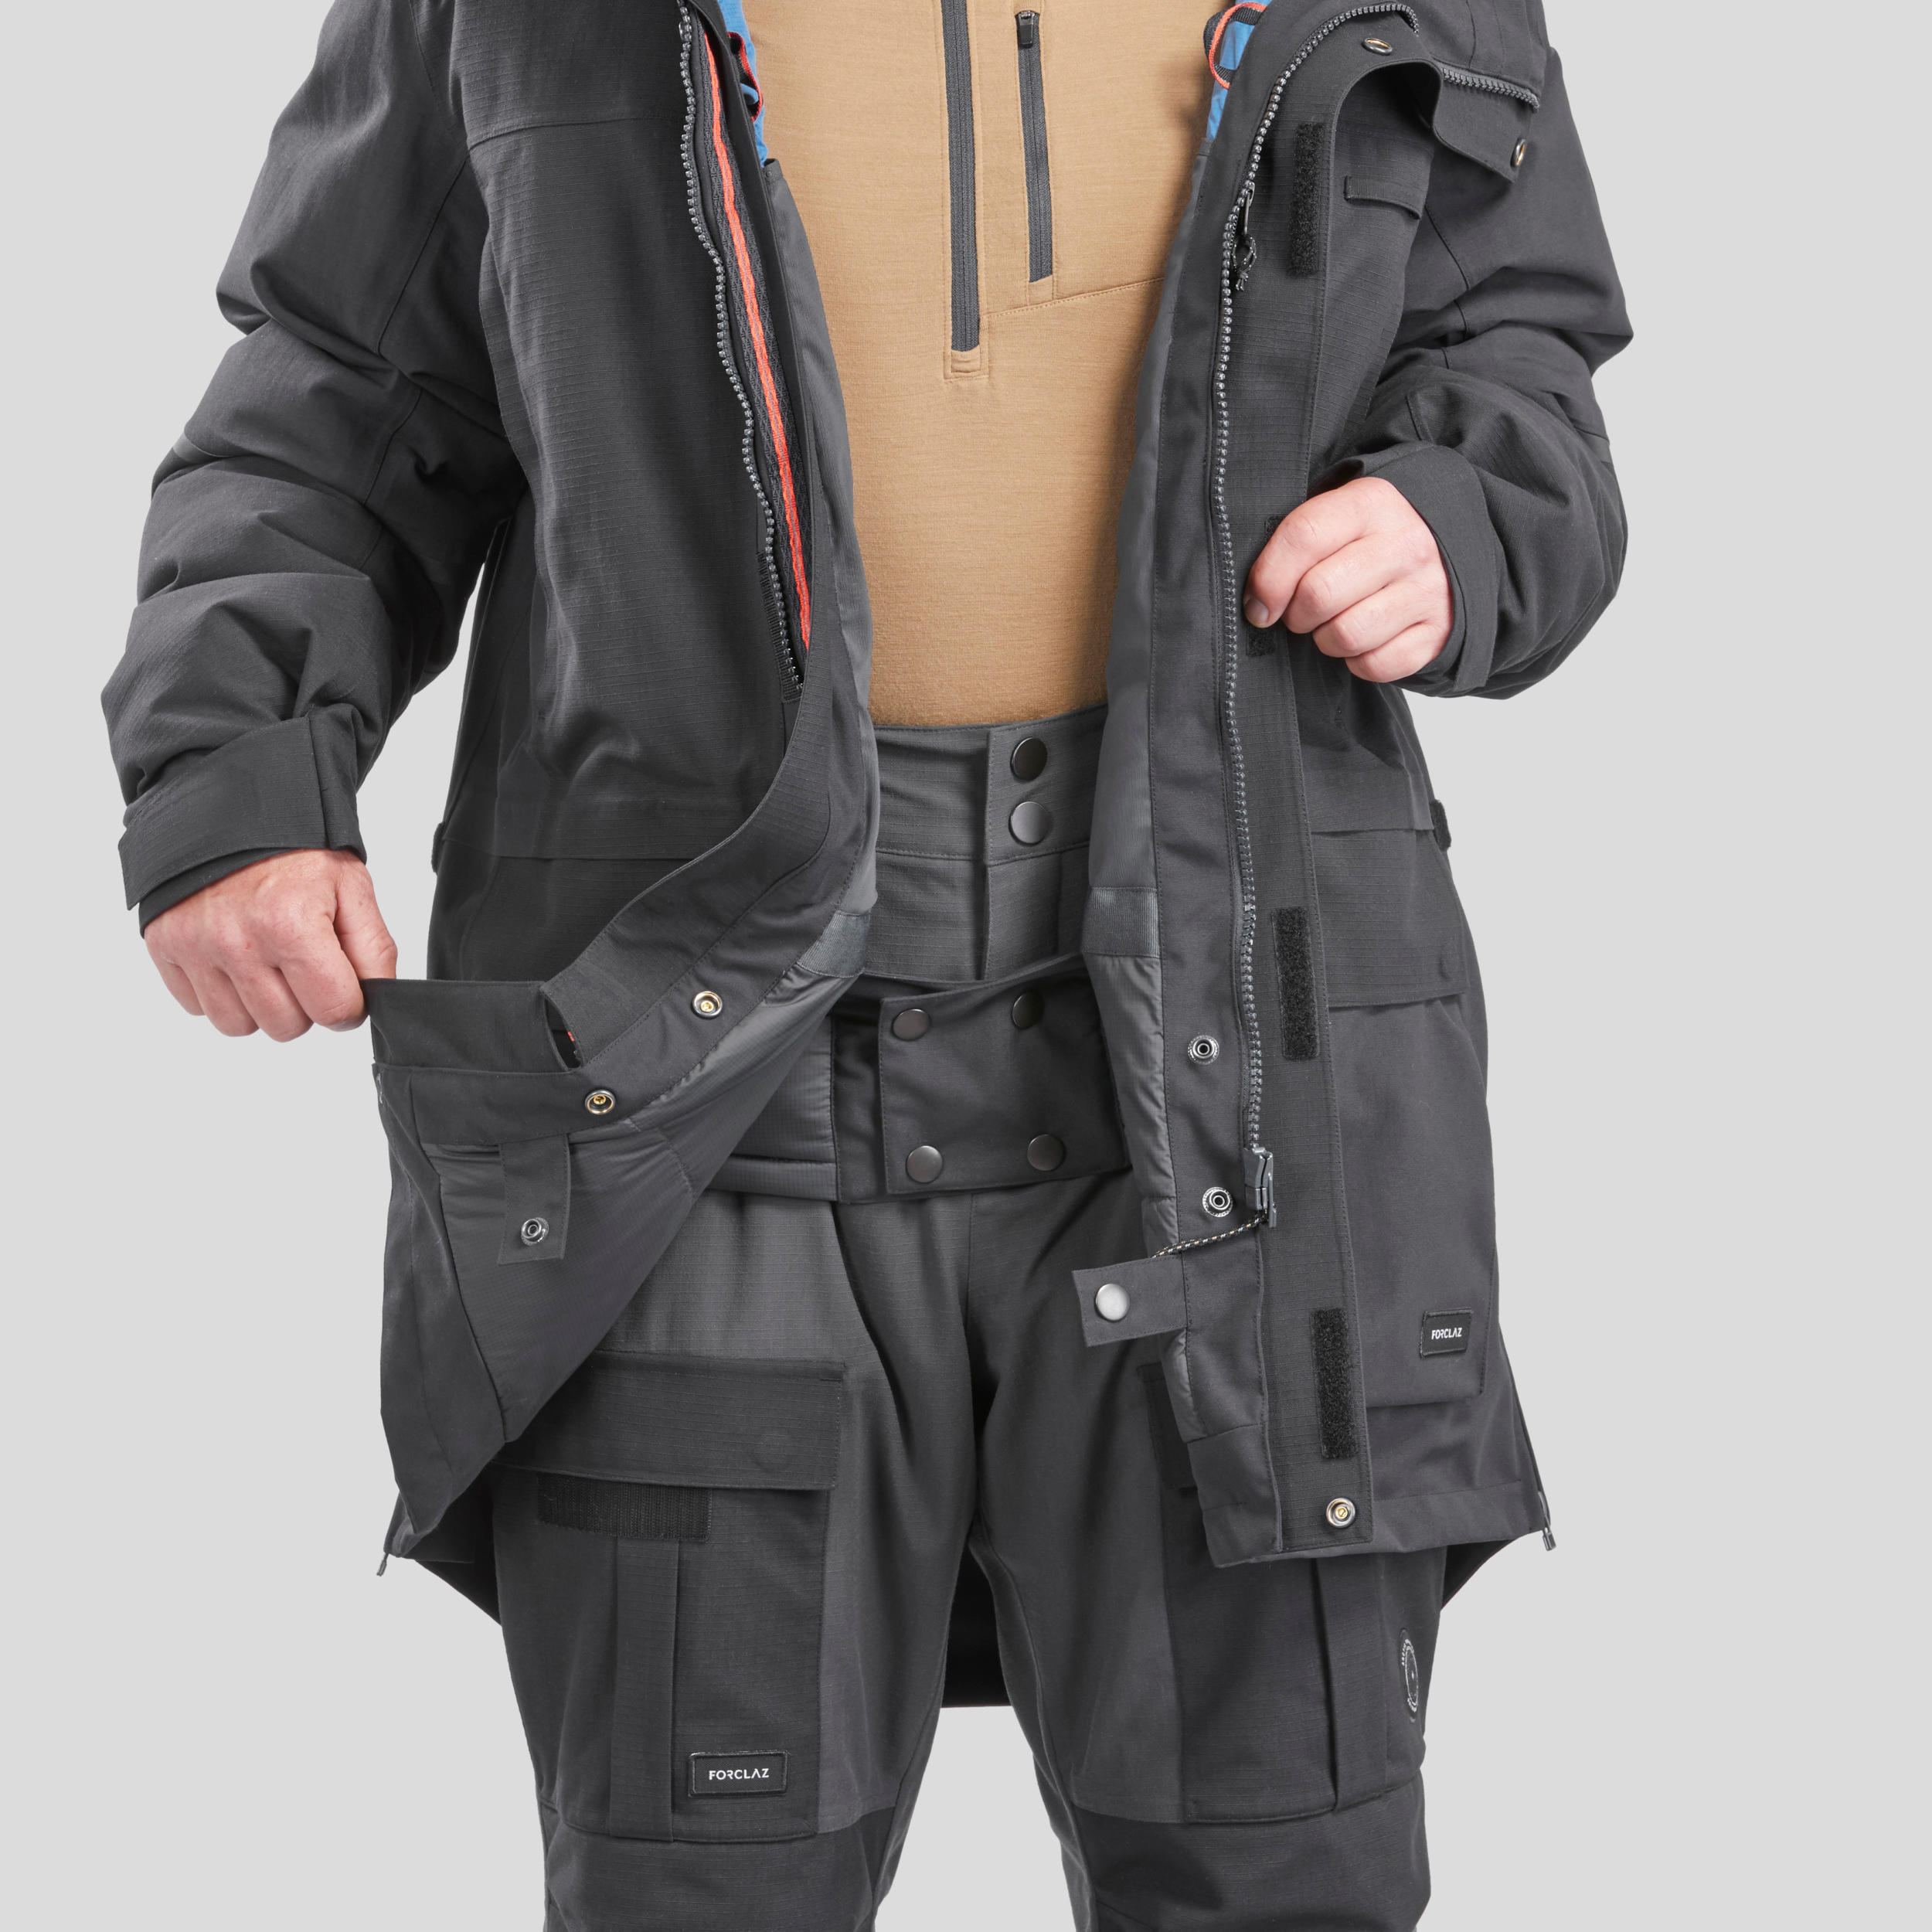 Unisex waterproof parka jacket - 900 - Black 9/21